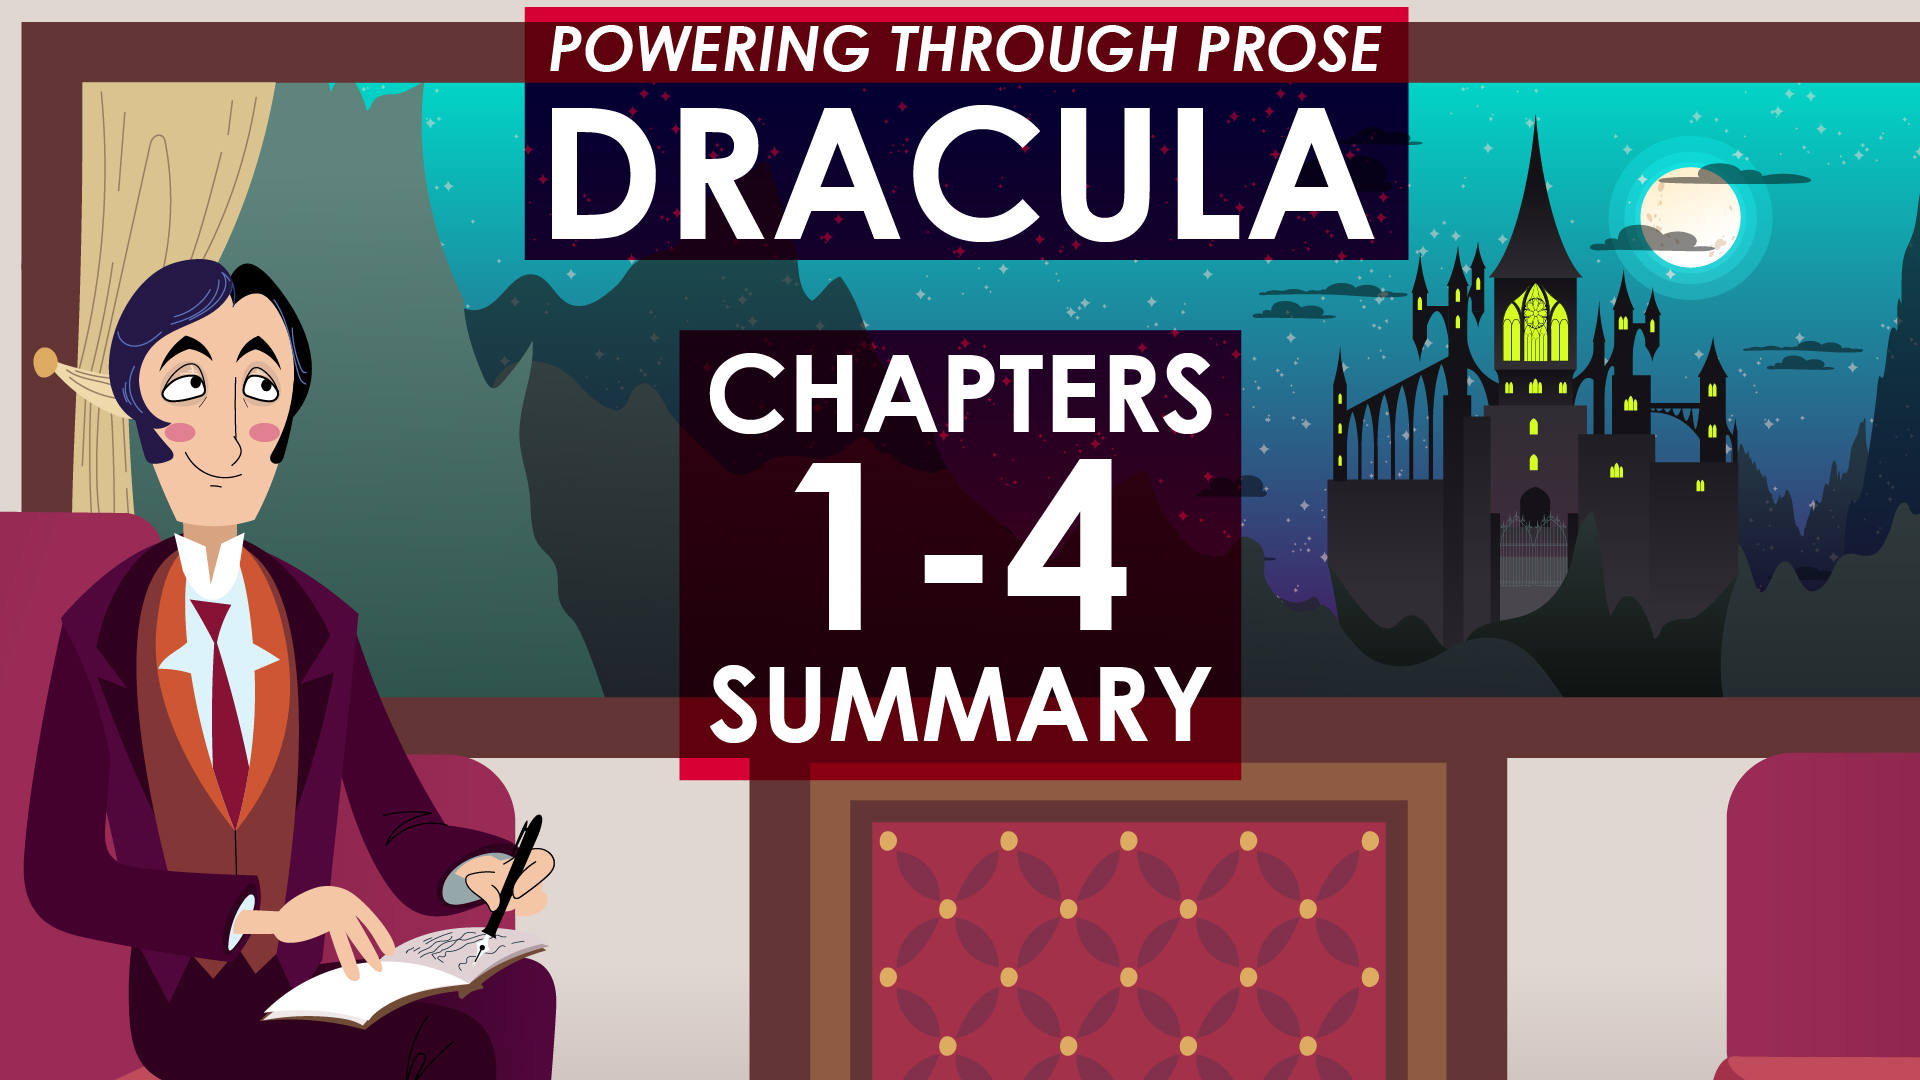 Dracula - Bram Stoker - Chapters 1-4 Summary - Powering Through Prose Series